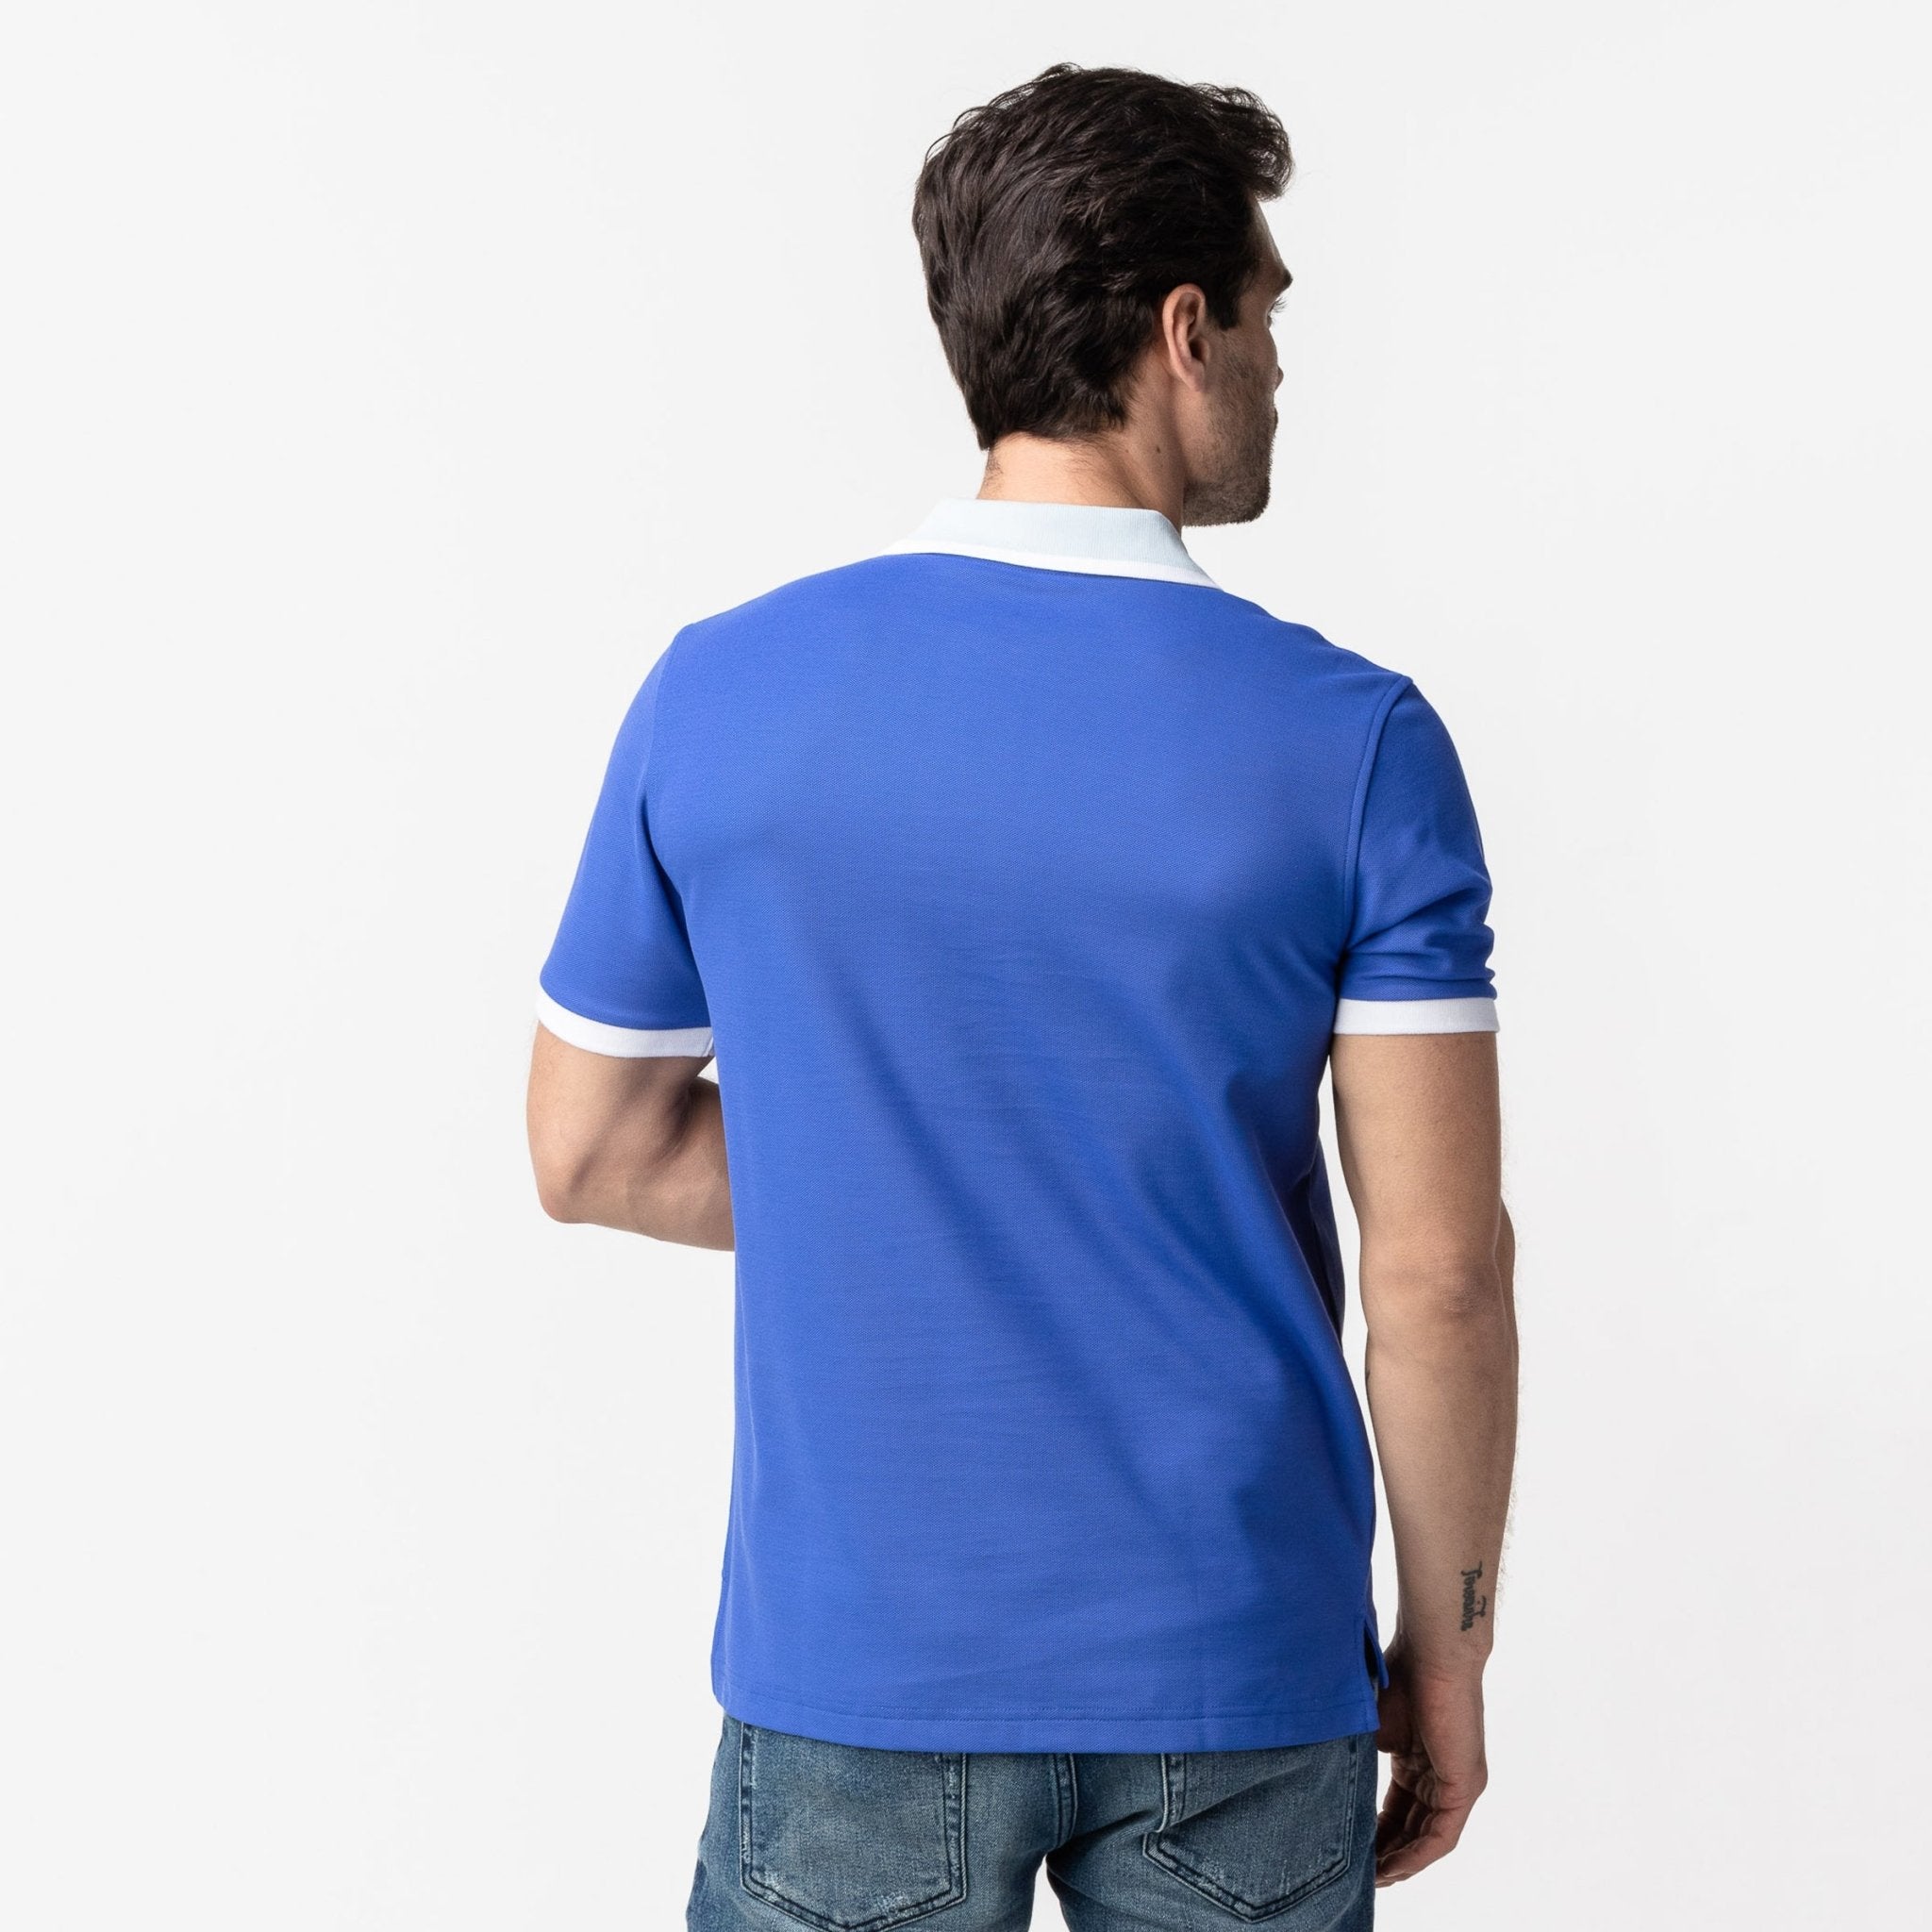 Men's Dazzling Contrast Neck Polo Shirt - JAMES BARK